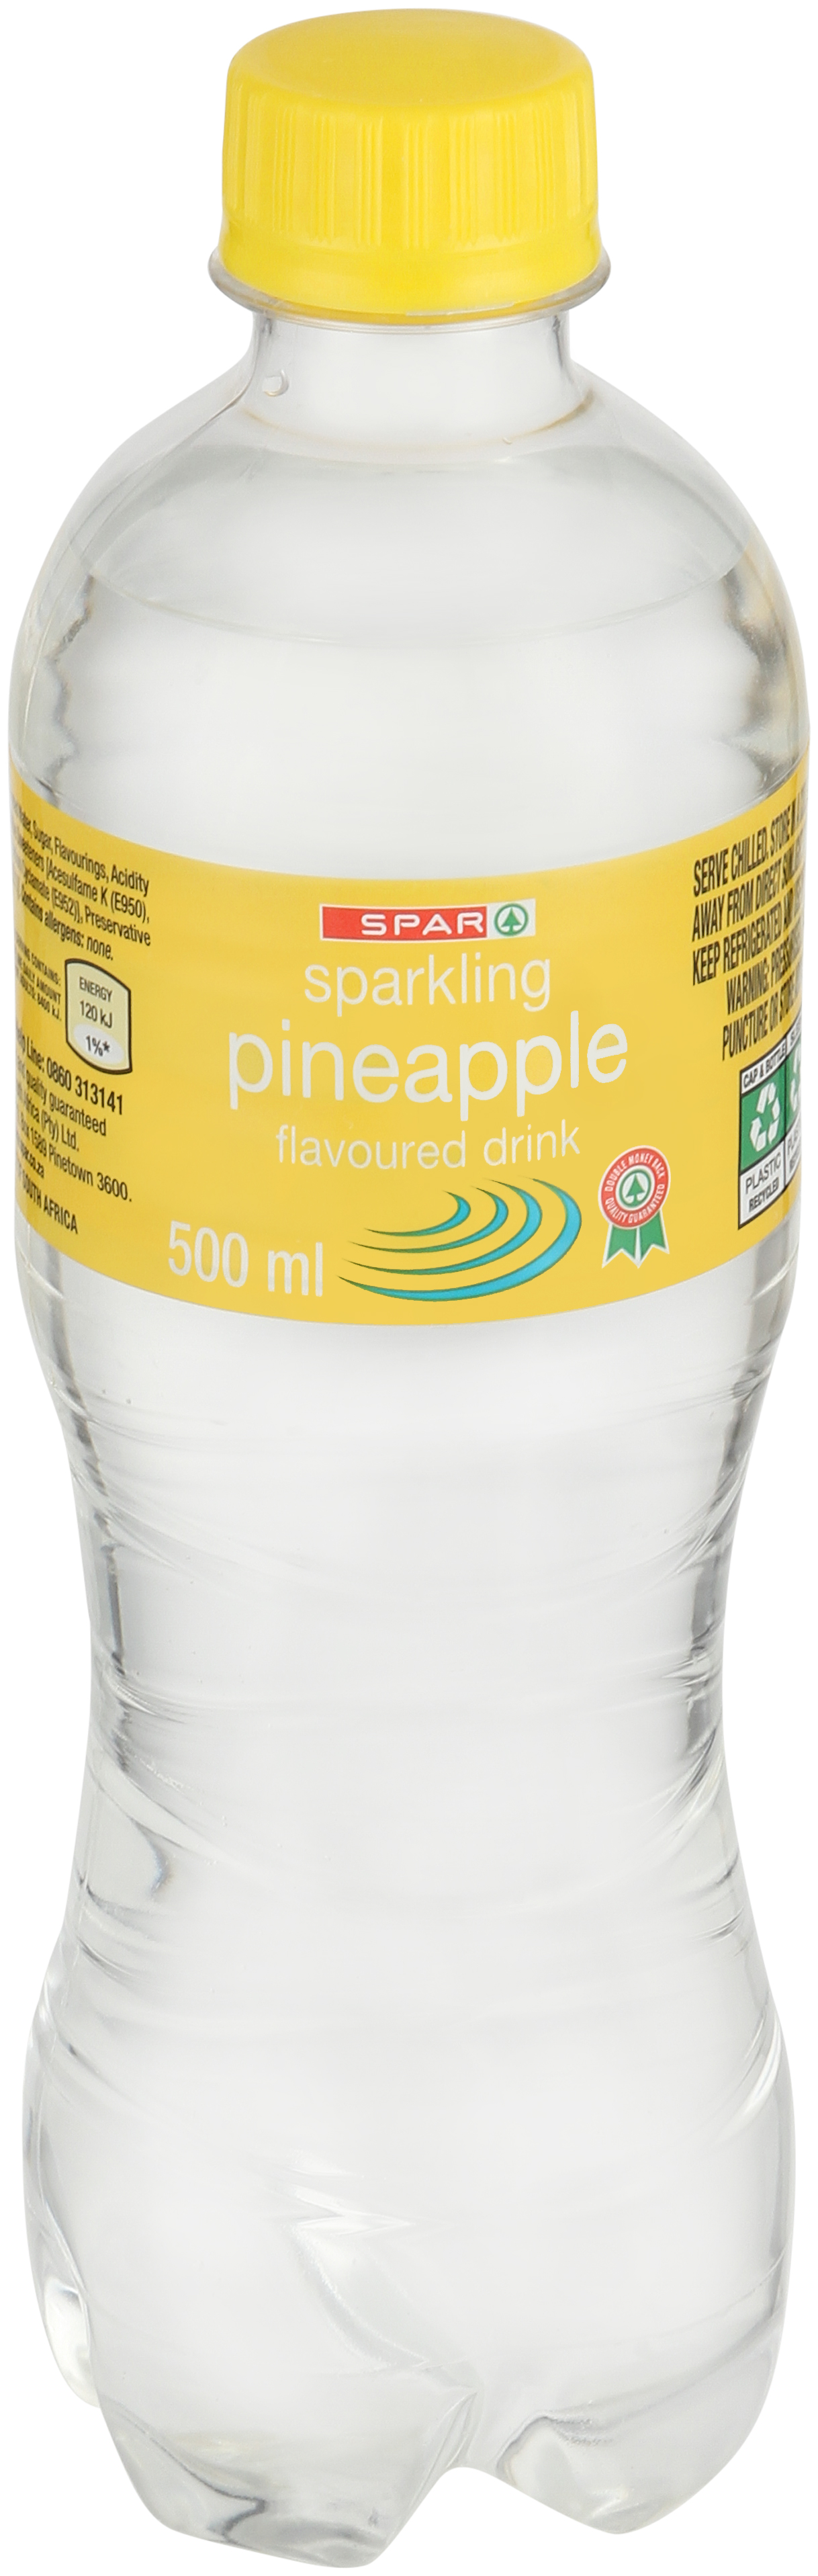 sparkling flavoured drink pineapple 